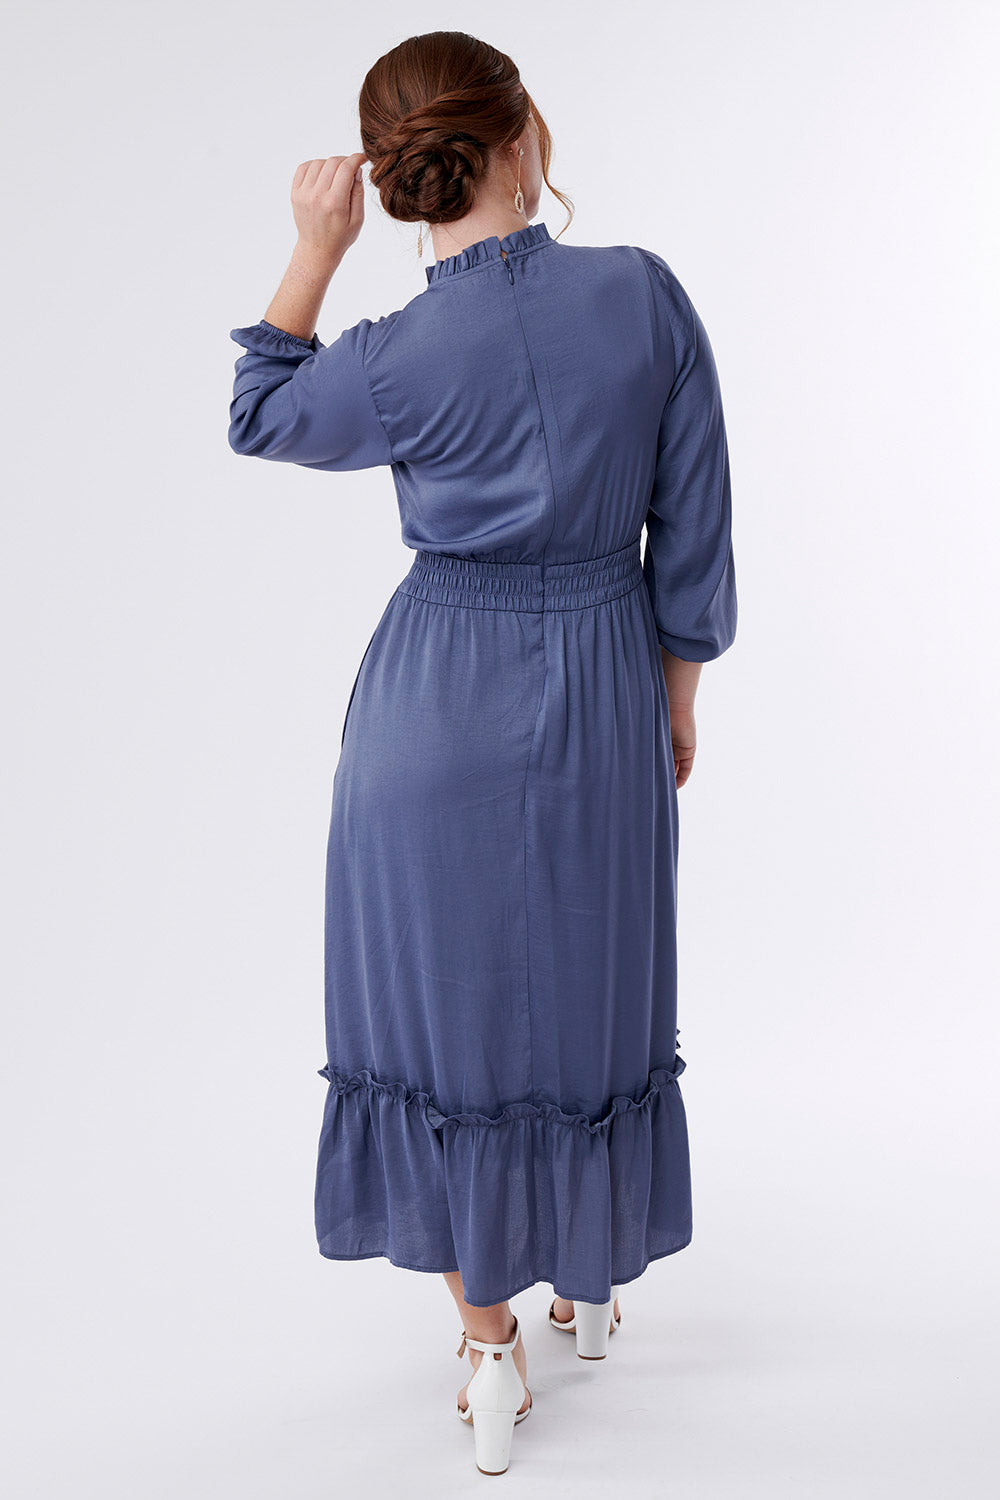 Victoria Pin Tuck Ruffled Dress- Blue